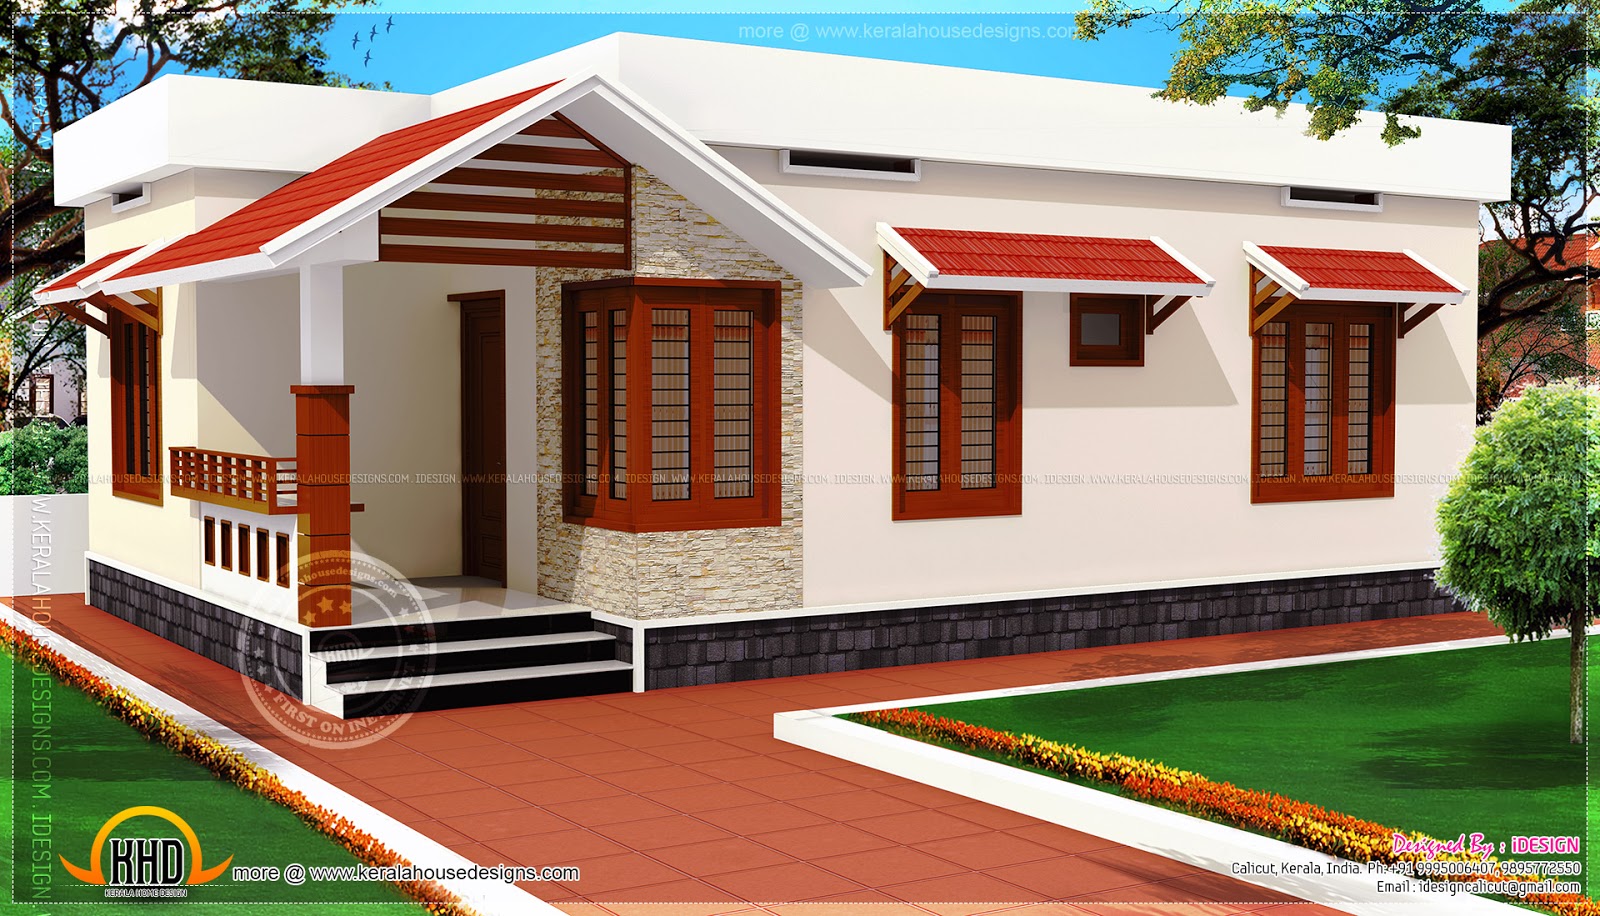 Low cost Kerala home design in 730 square feet Newbrough